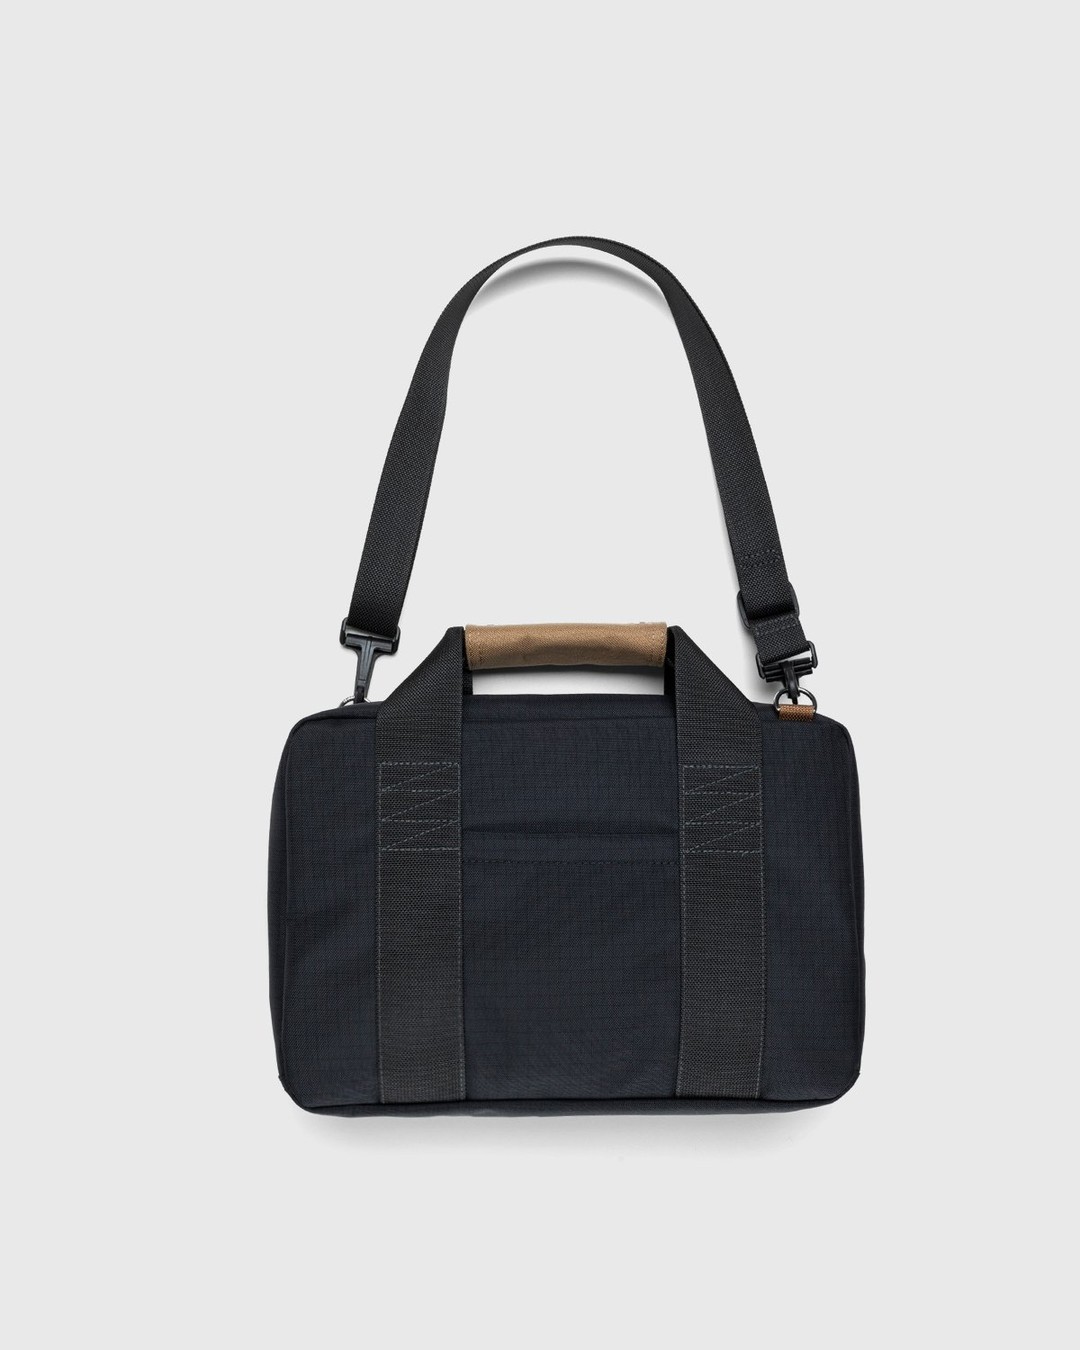 Acne Studios – Nylon Crossbody Laptop Bag Black/Khaki Green - Bags - Black - Image 2